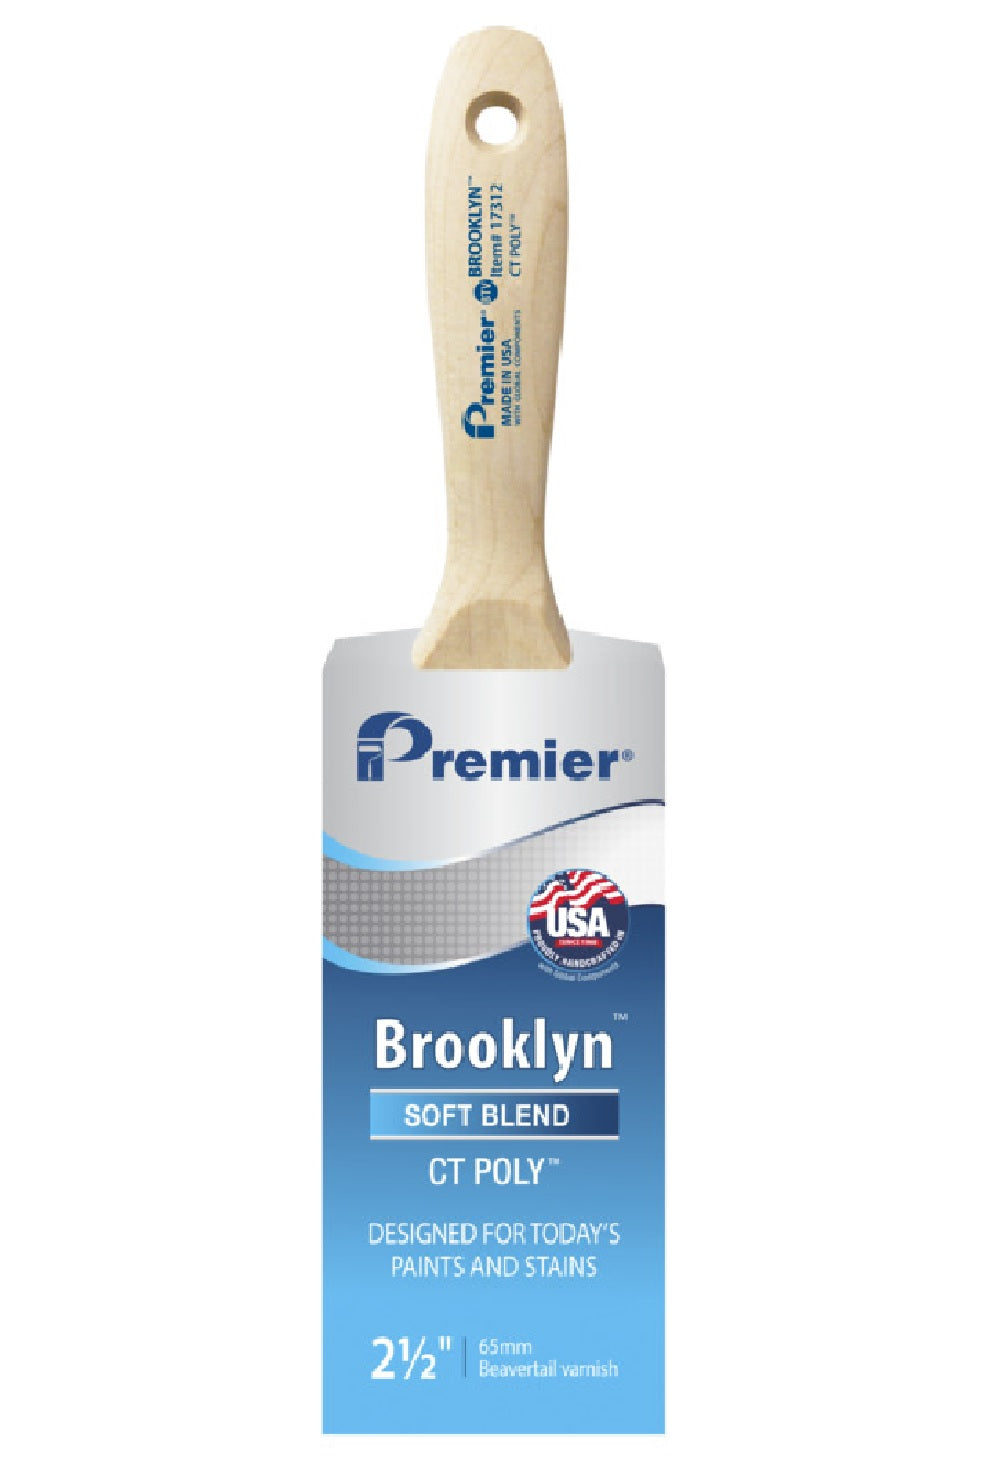 Premier 17312 Brooklyn Beavertail Varnish Paint Brush, 2-1/2 Inch